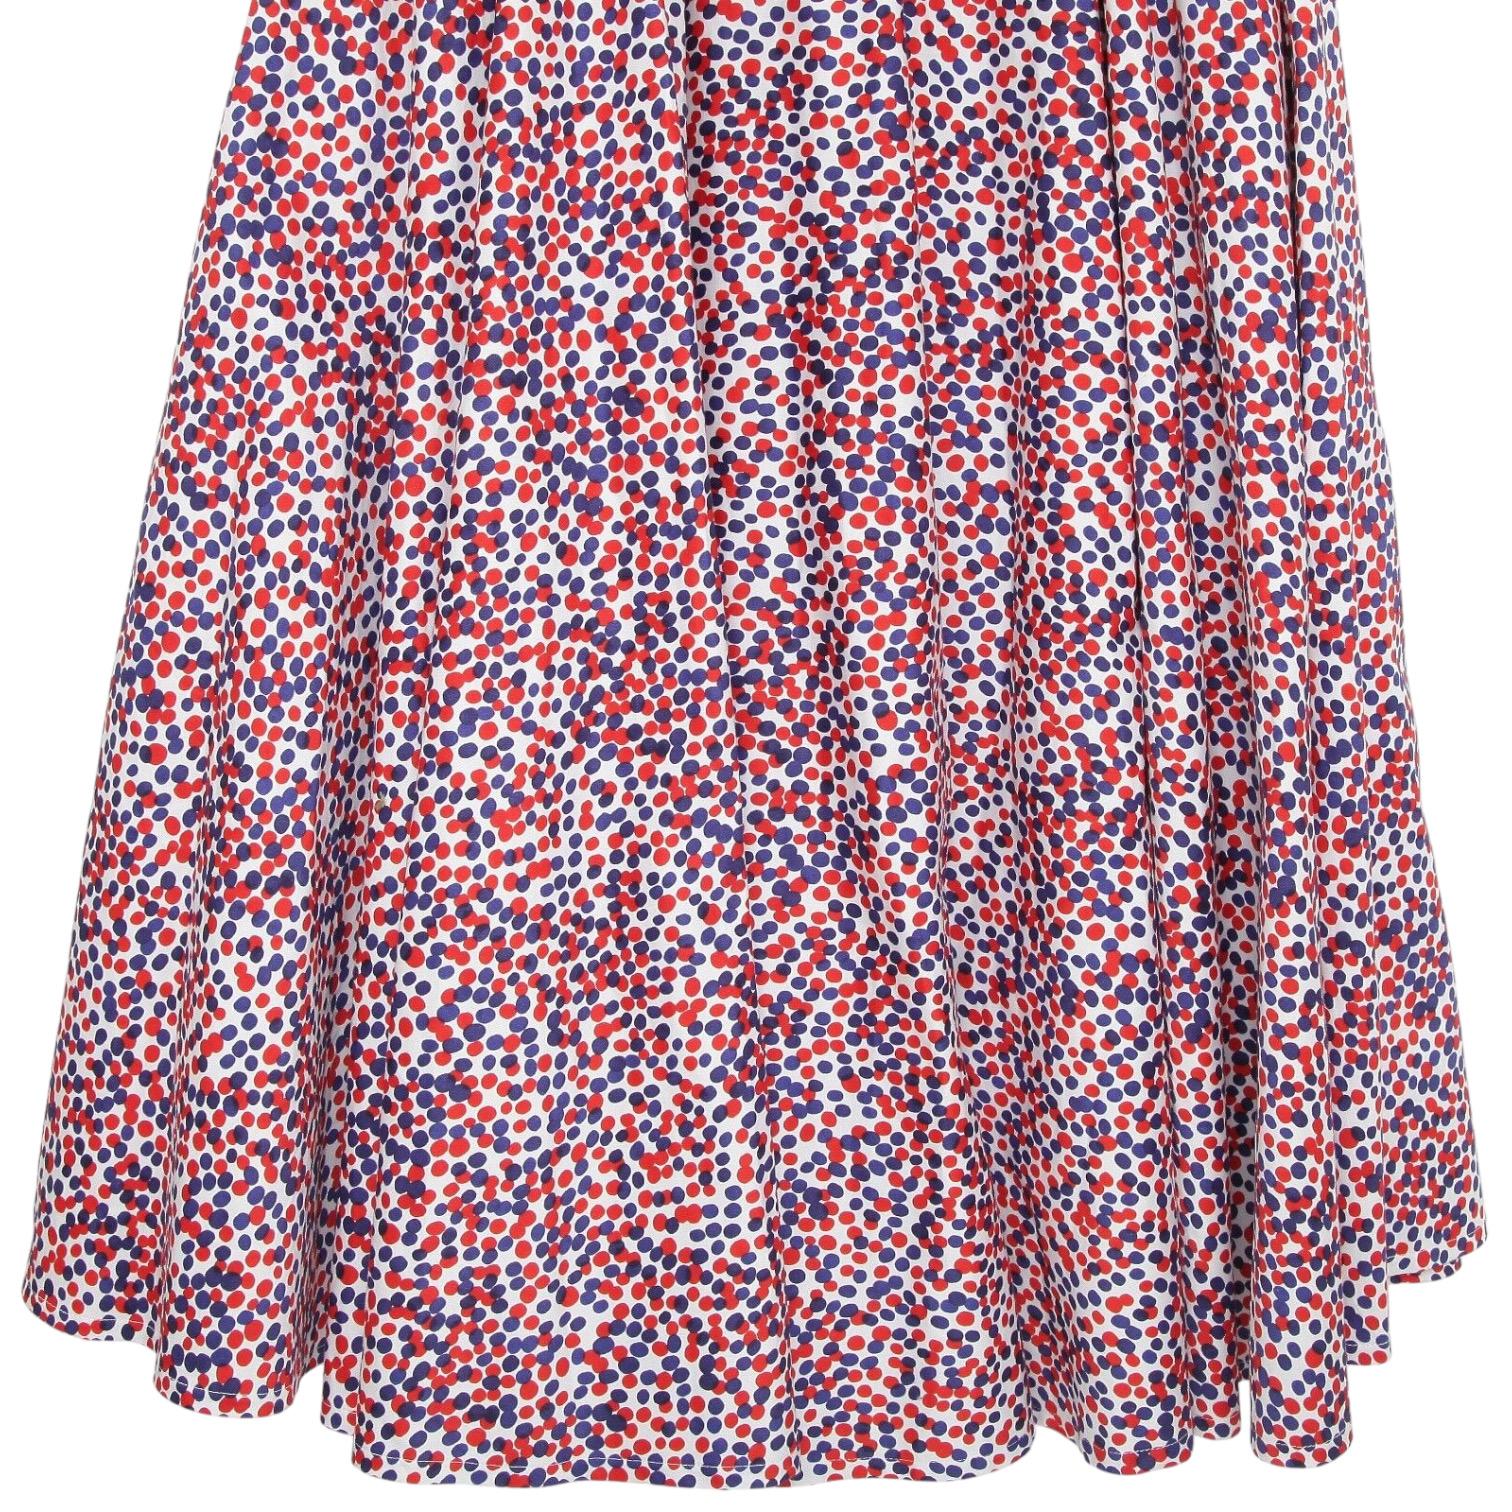 CAROLINA HERRERA Skirt Umbrella Polka Dot Full Maxi Cotton Blend Dress Sz 8 For Sale 1